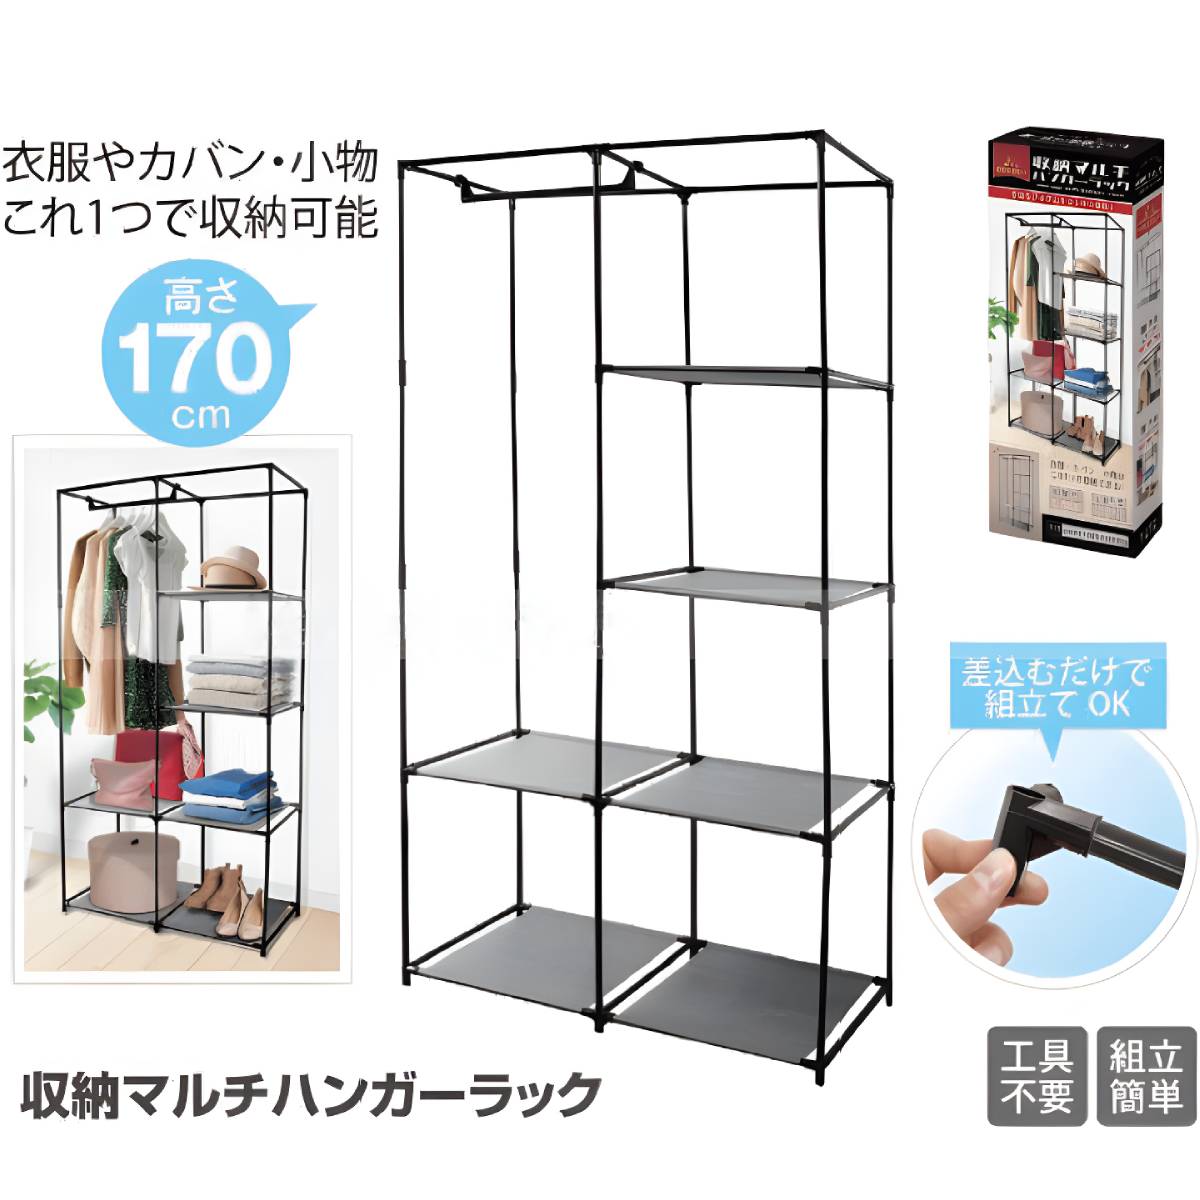 Multi Hanger Rack (Japan Edition)